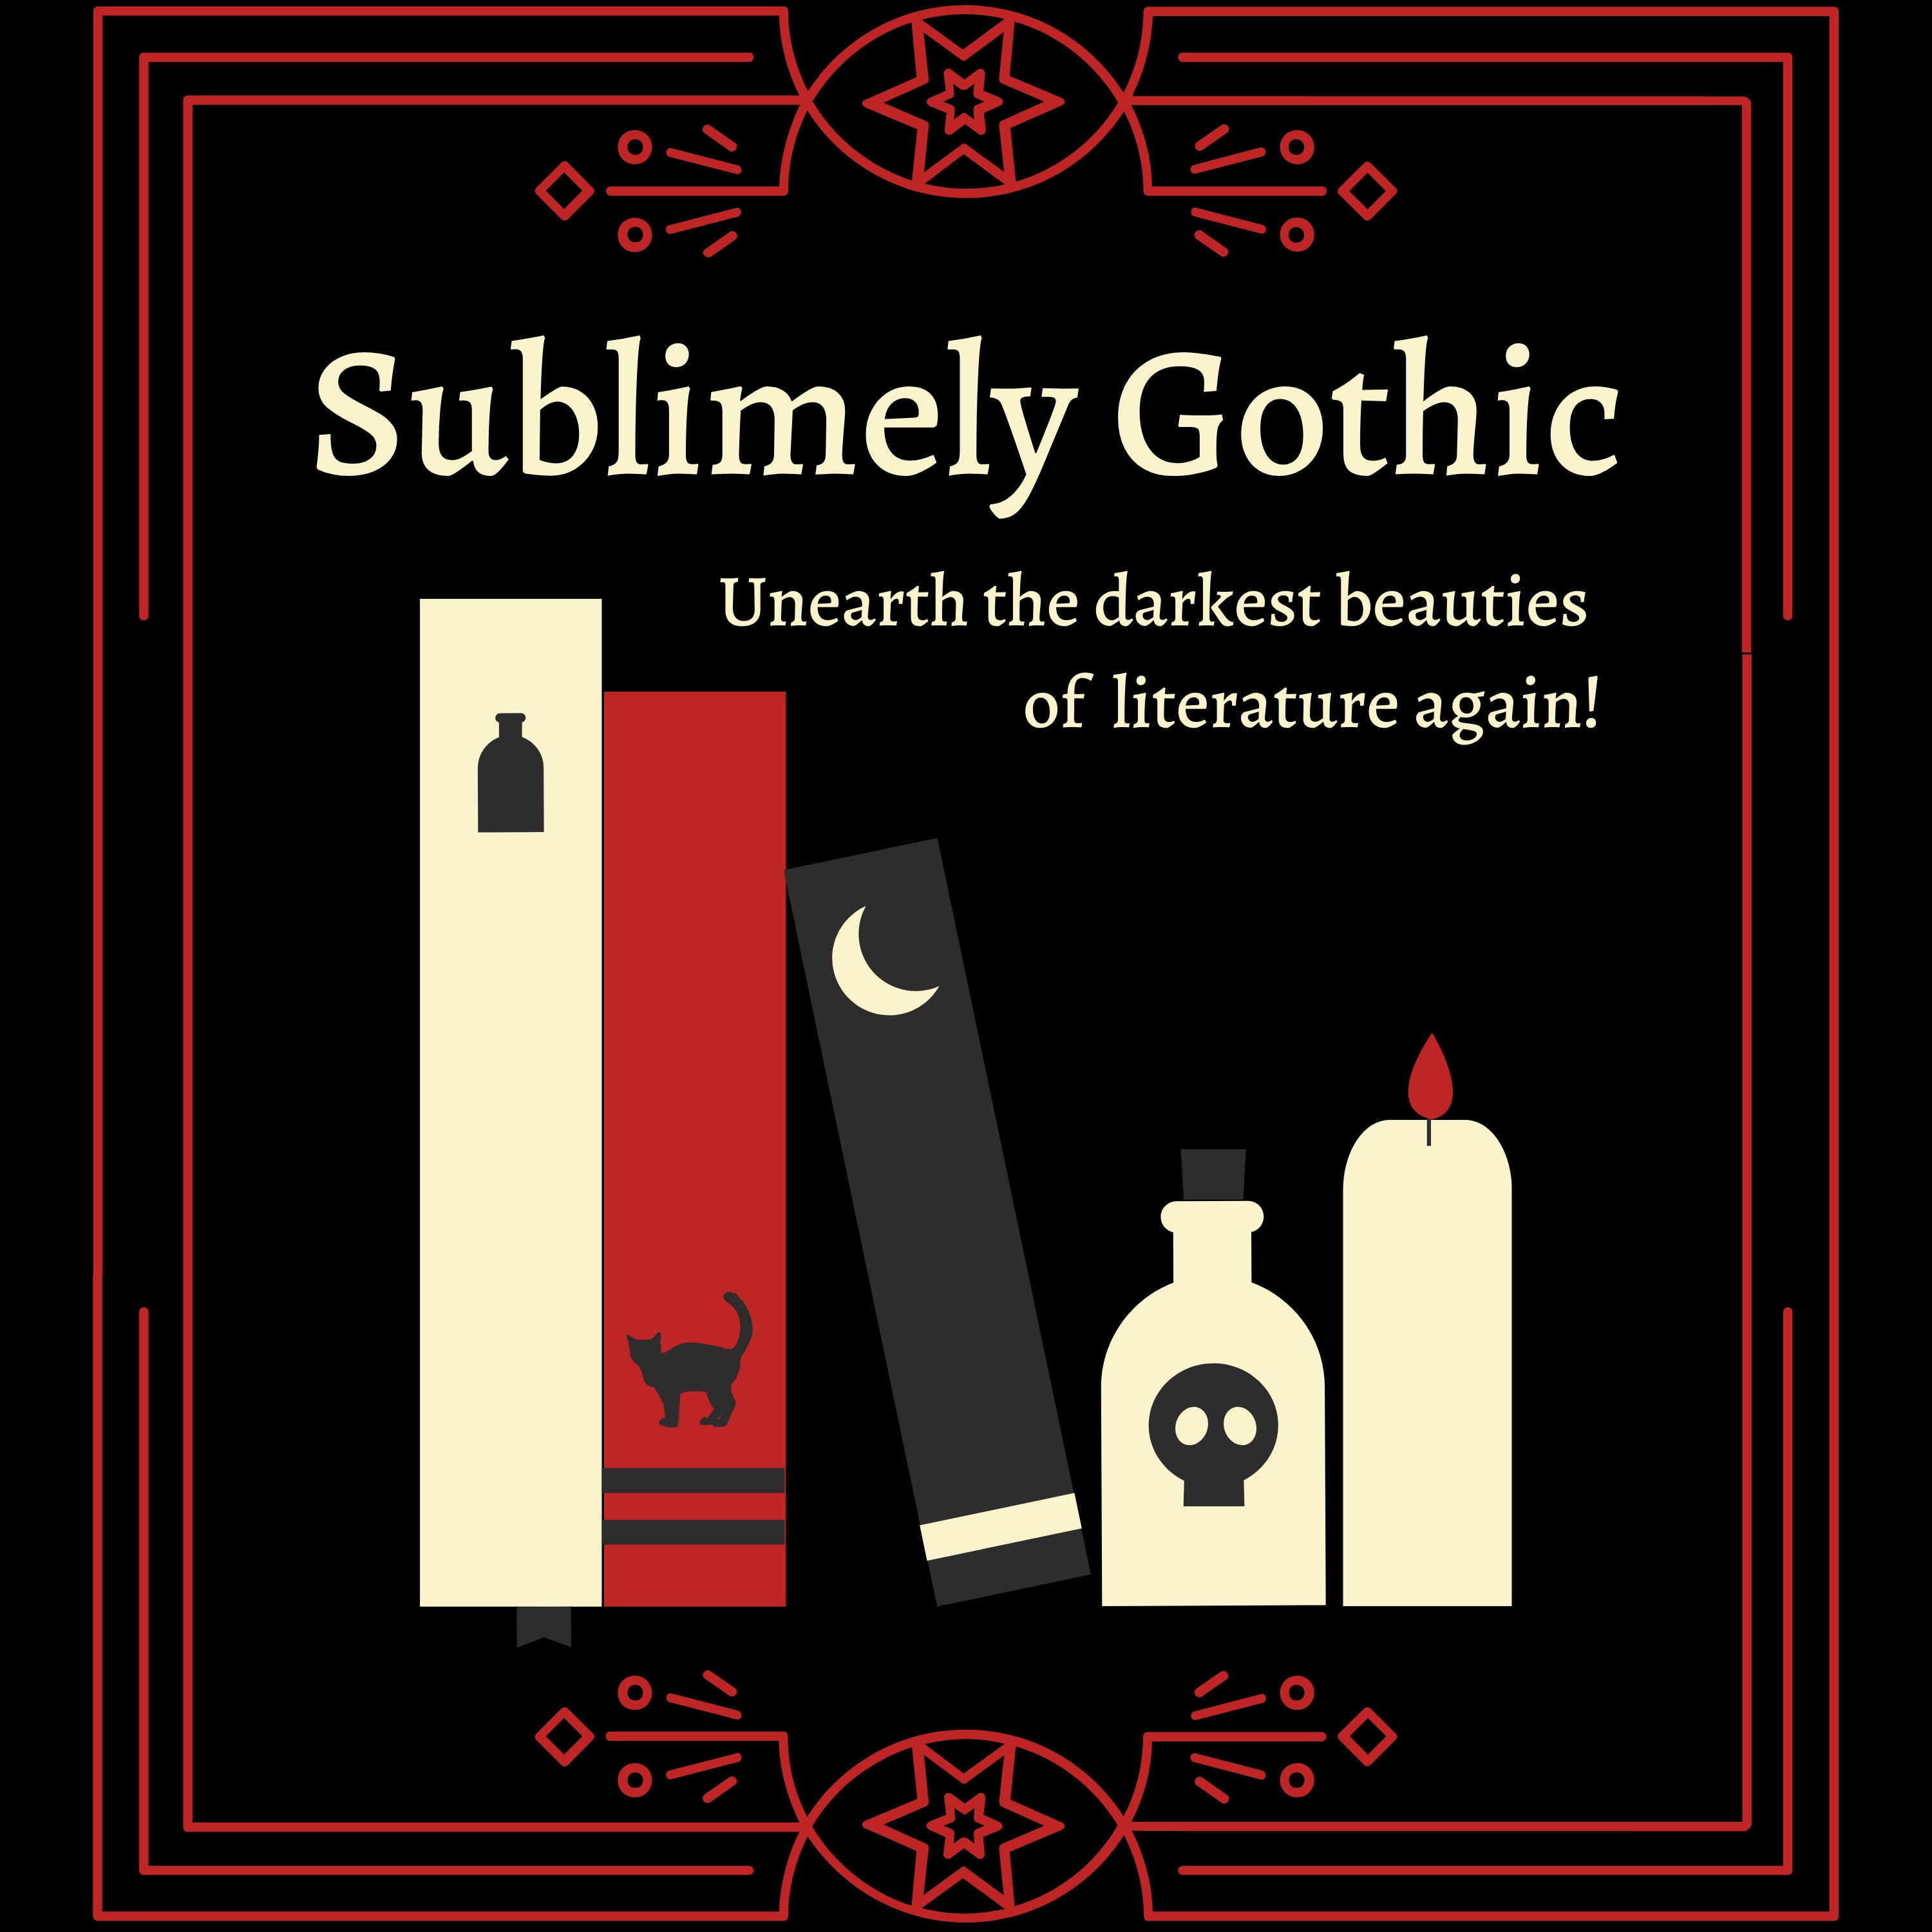 Sublimely Gothic: Horrid